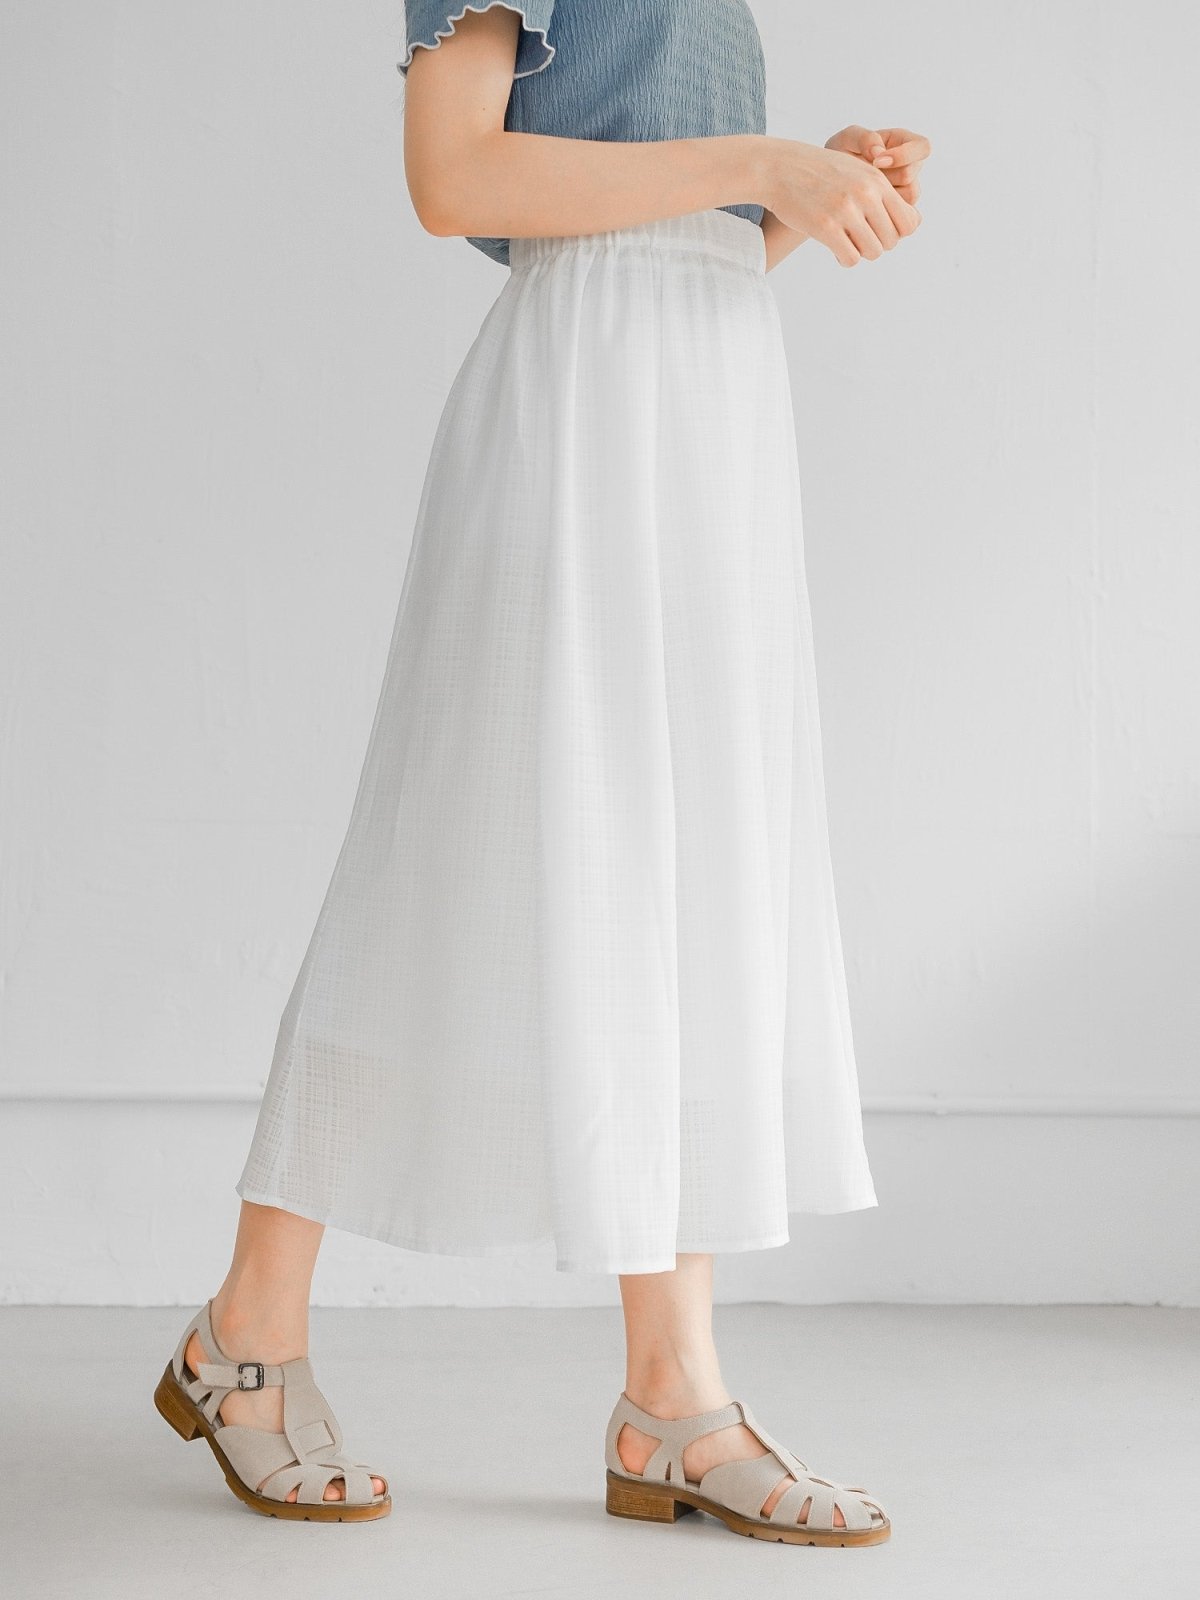 Chloe Checker Patterned Skirt - DAG-DD0191-23IvoryPlaidF - White - F - D'ZAGE Designs